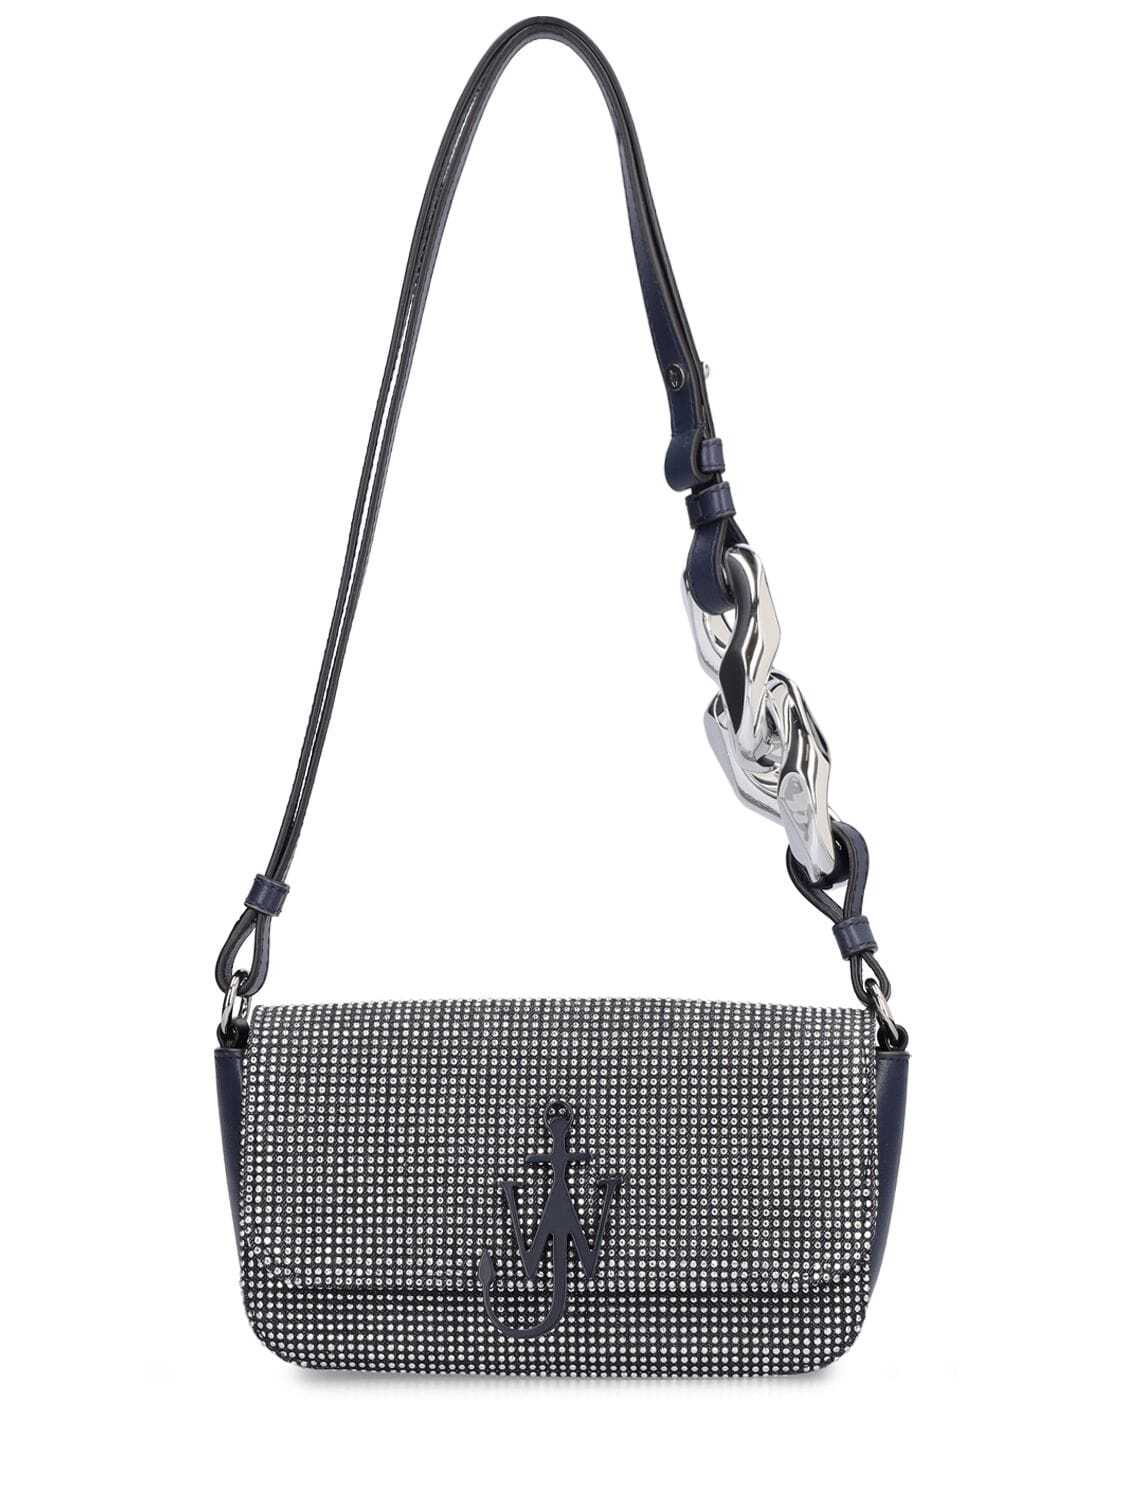 JW ANDERSON Anchor Studded Chain Bag in indigo / silver